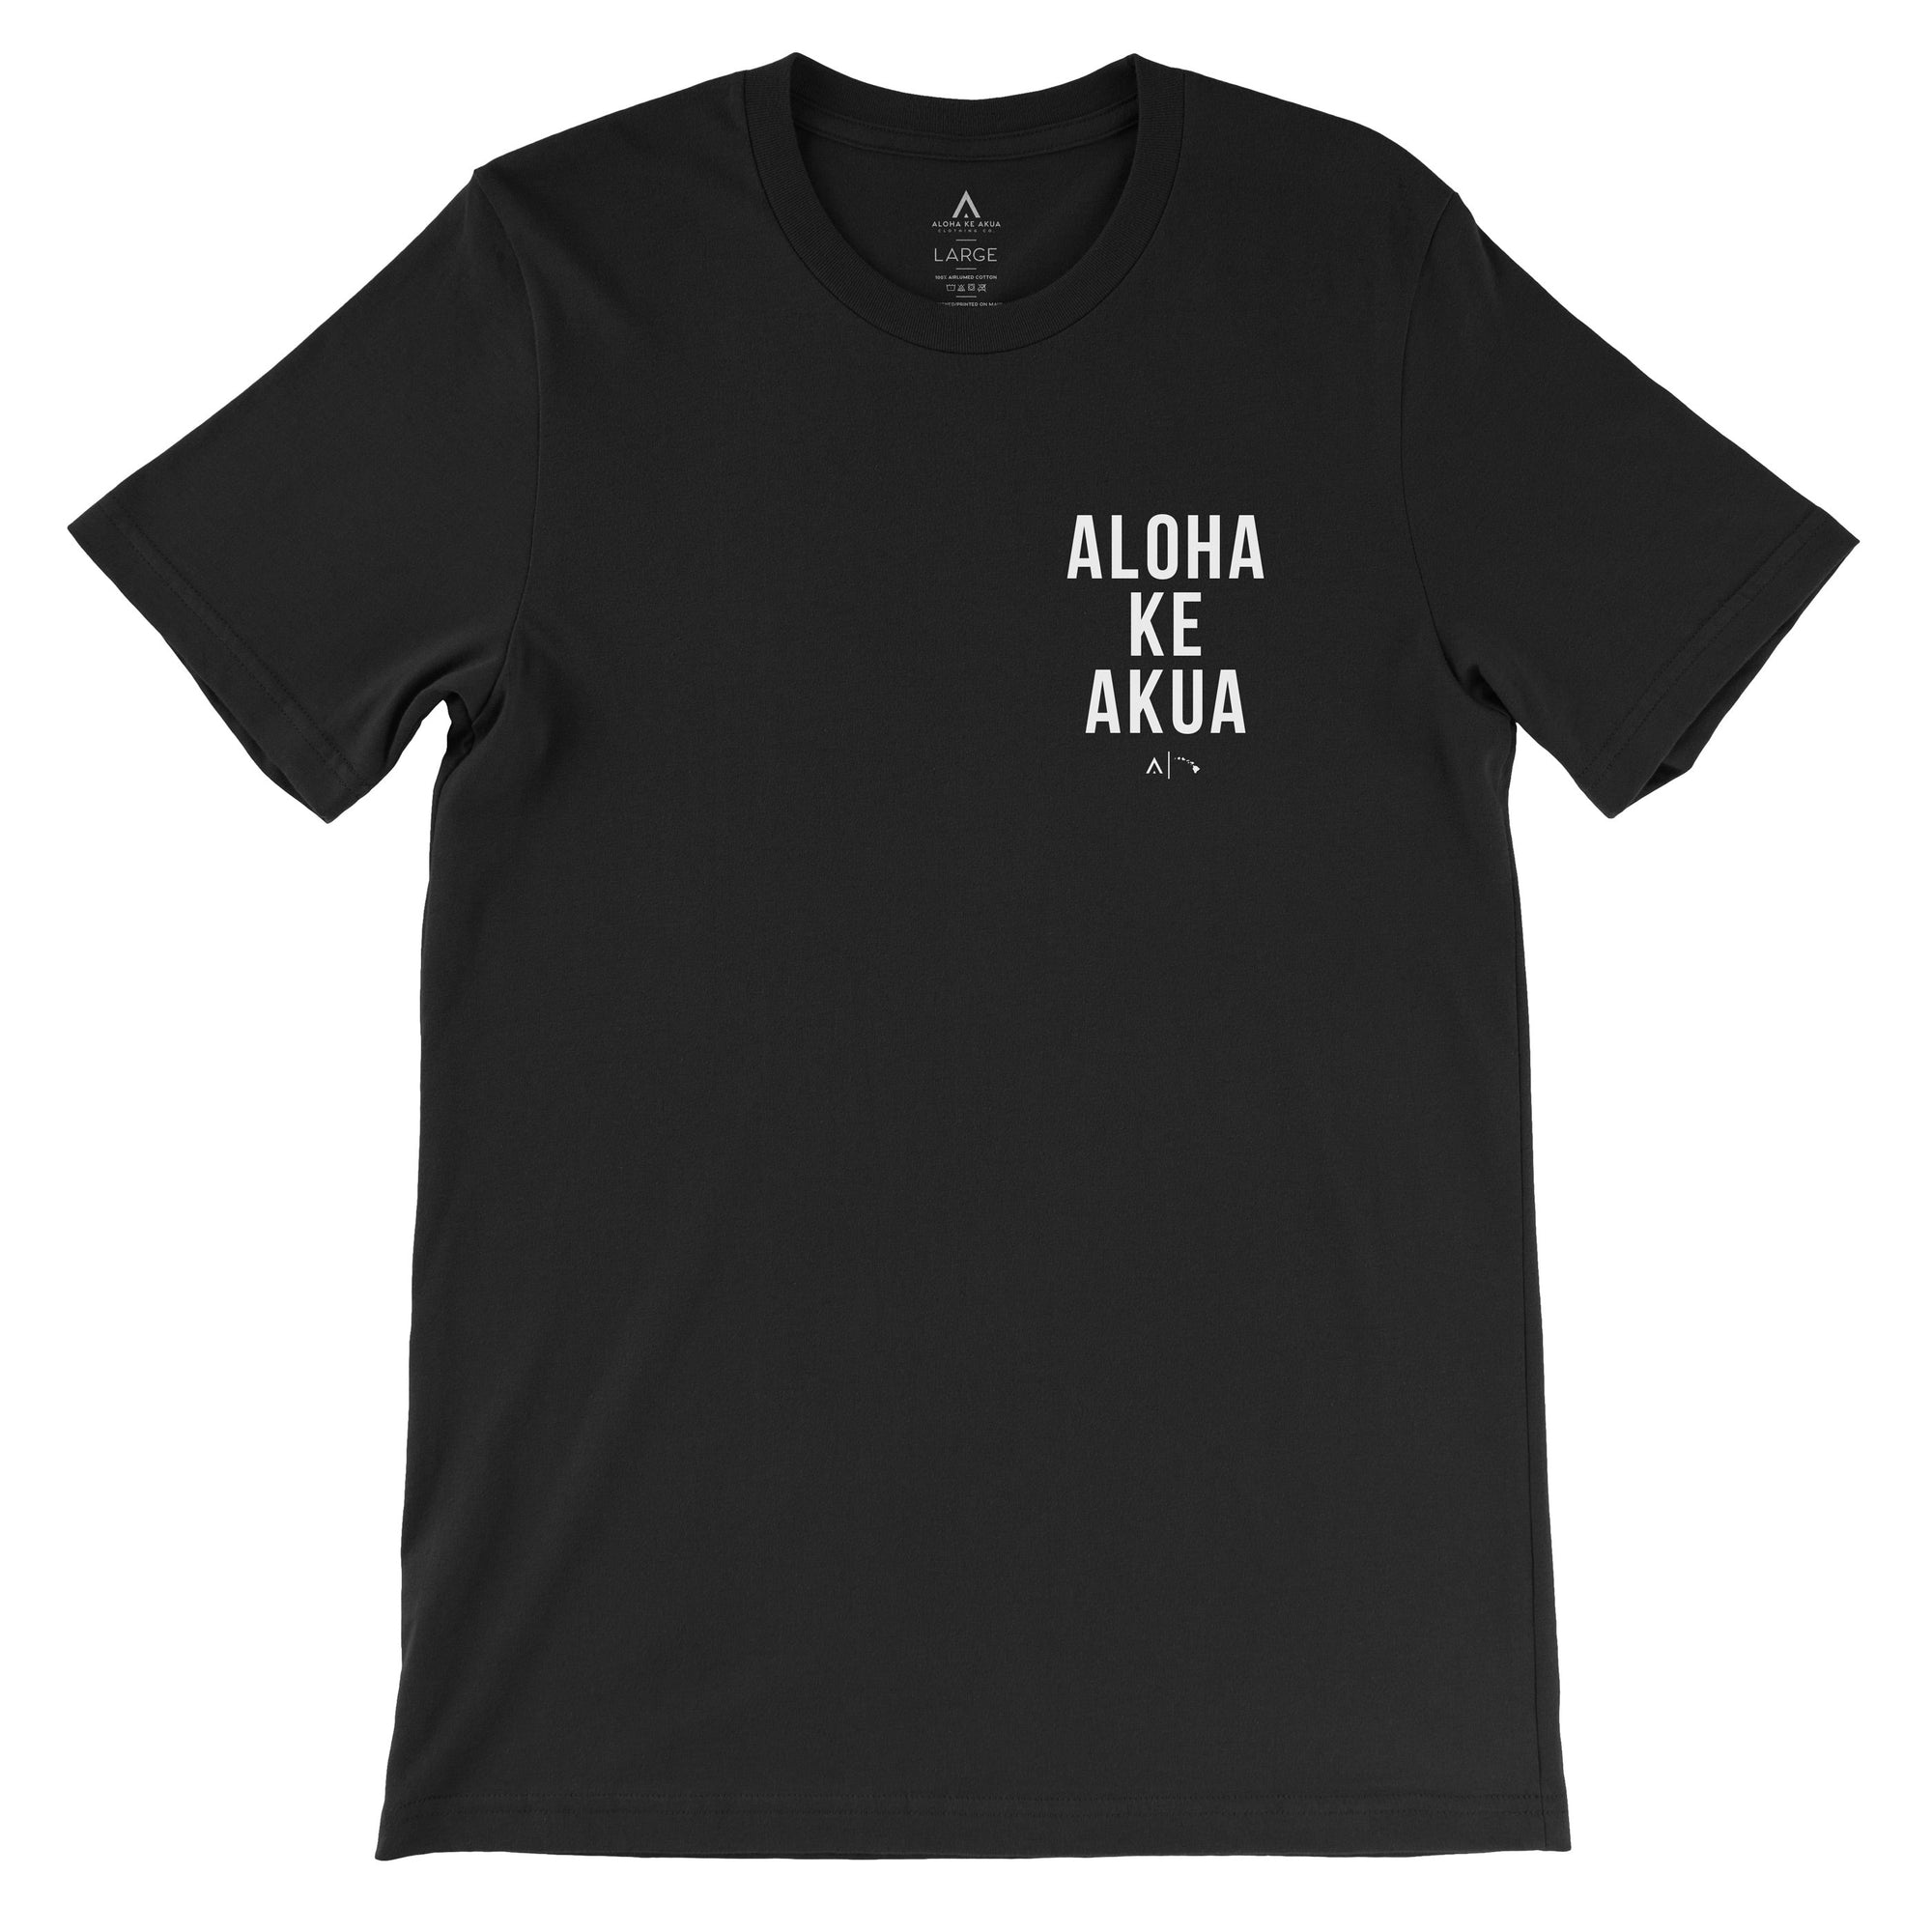 Pop-Up Mākeke - Aloha Ke Akua Clothing - Men's Short Sleeve T-Shirt - Black - Front View